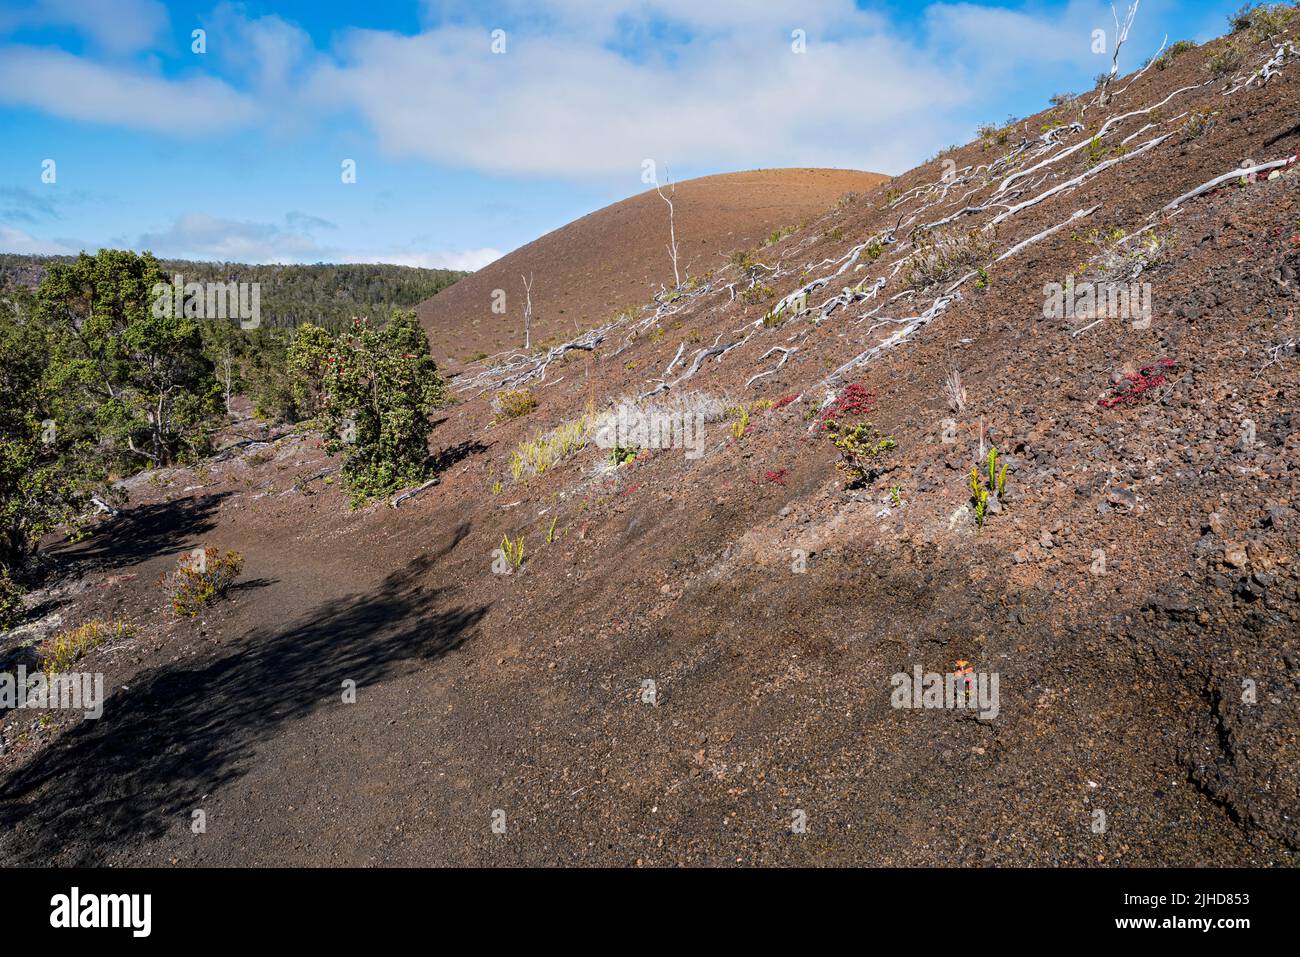 pu'u pua'i cinder cone along byron ledge trail at hawaii volcanoes national park Stock Photo